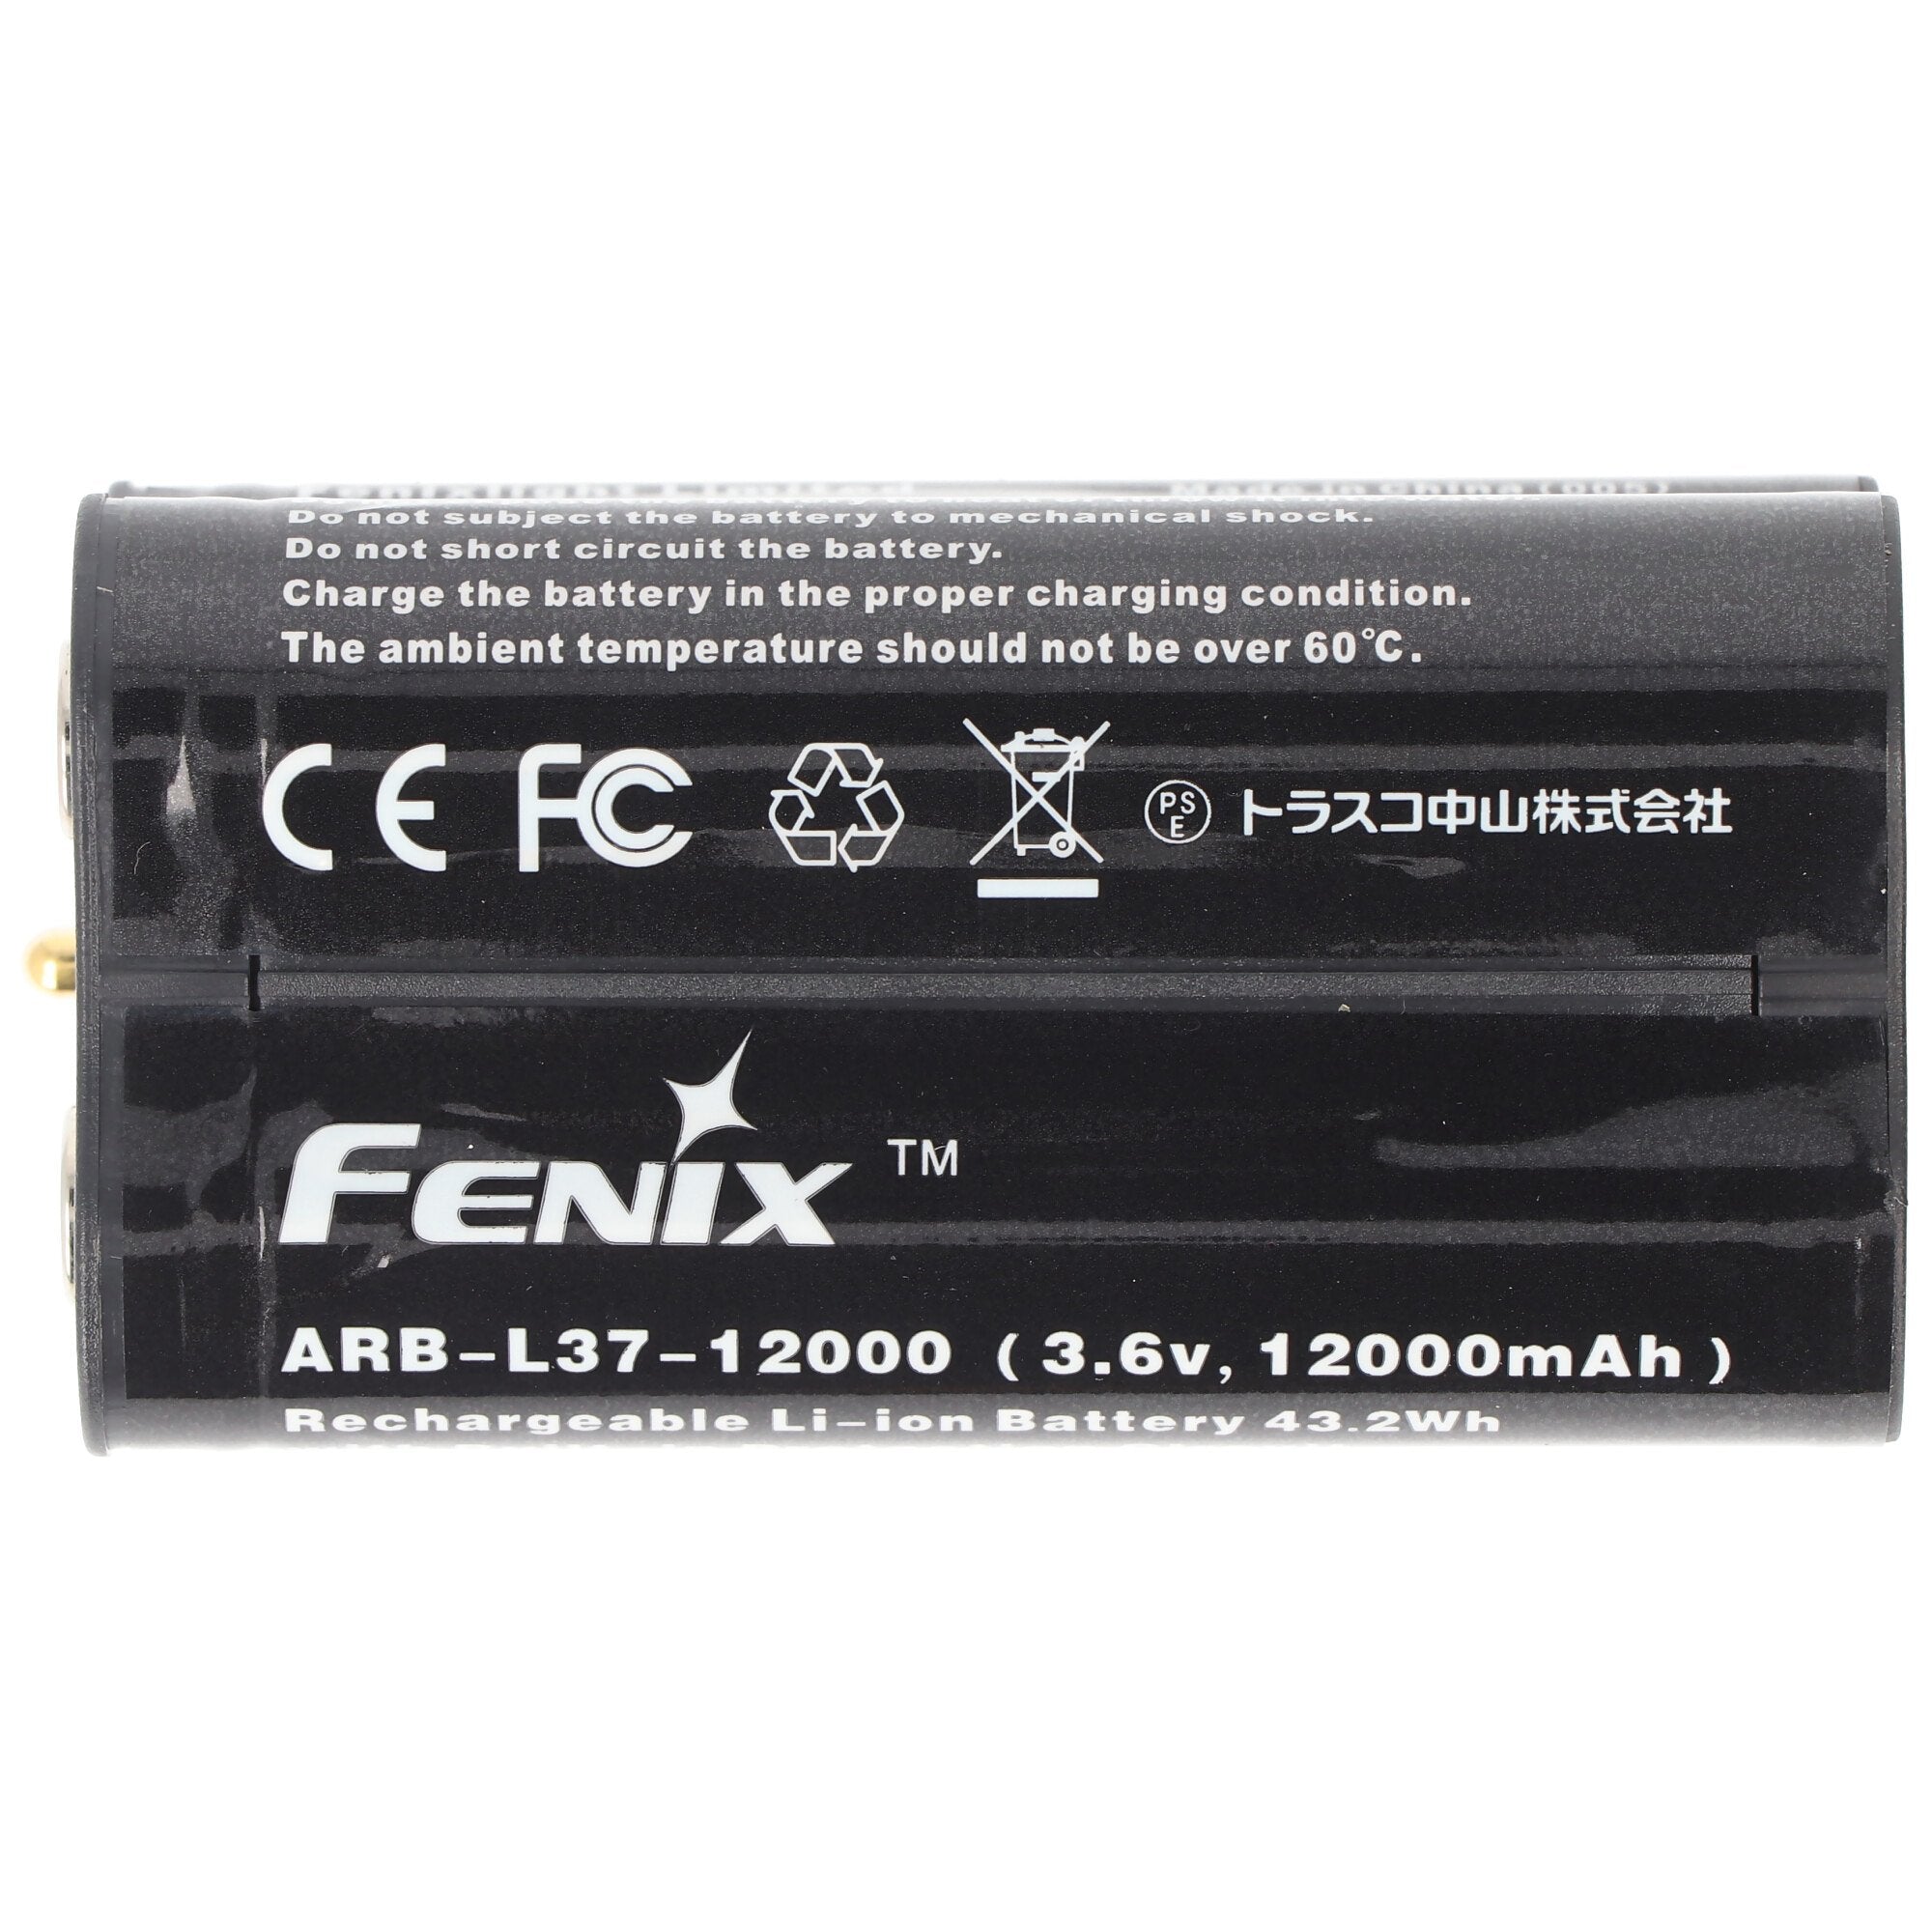 Battery suitable for the Fenix LR40R LED flashlight, Fenix ARB-L37-12000 LiIon battery pack for LR40